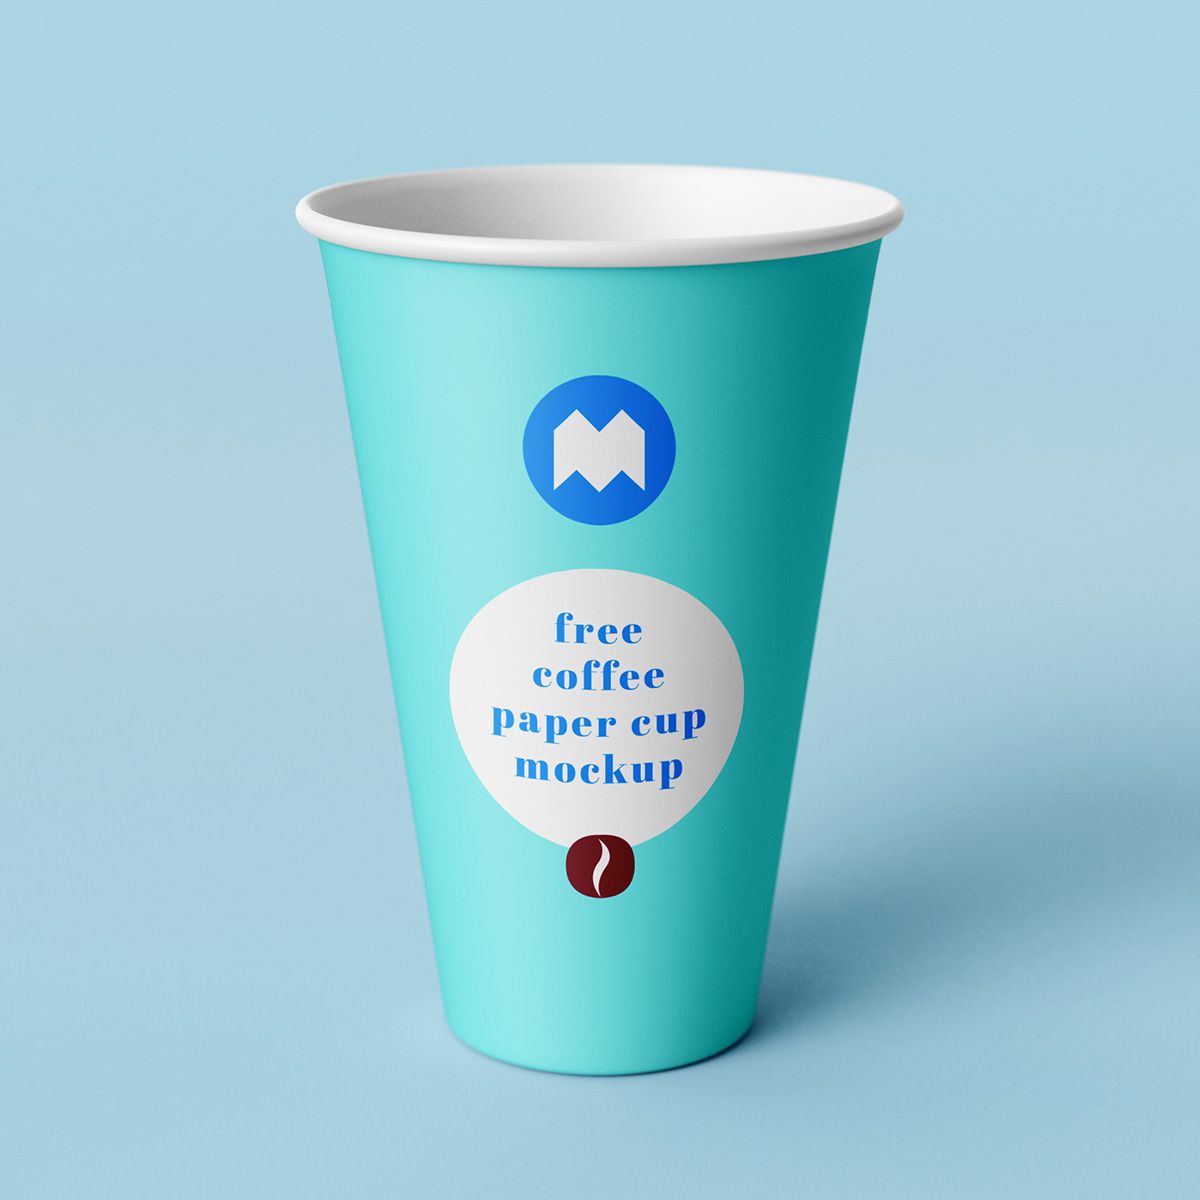 Free coffee paper cup mockup set